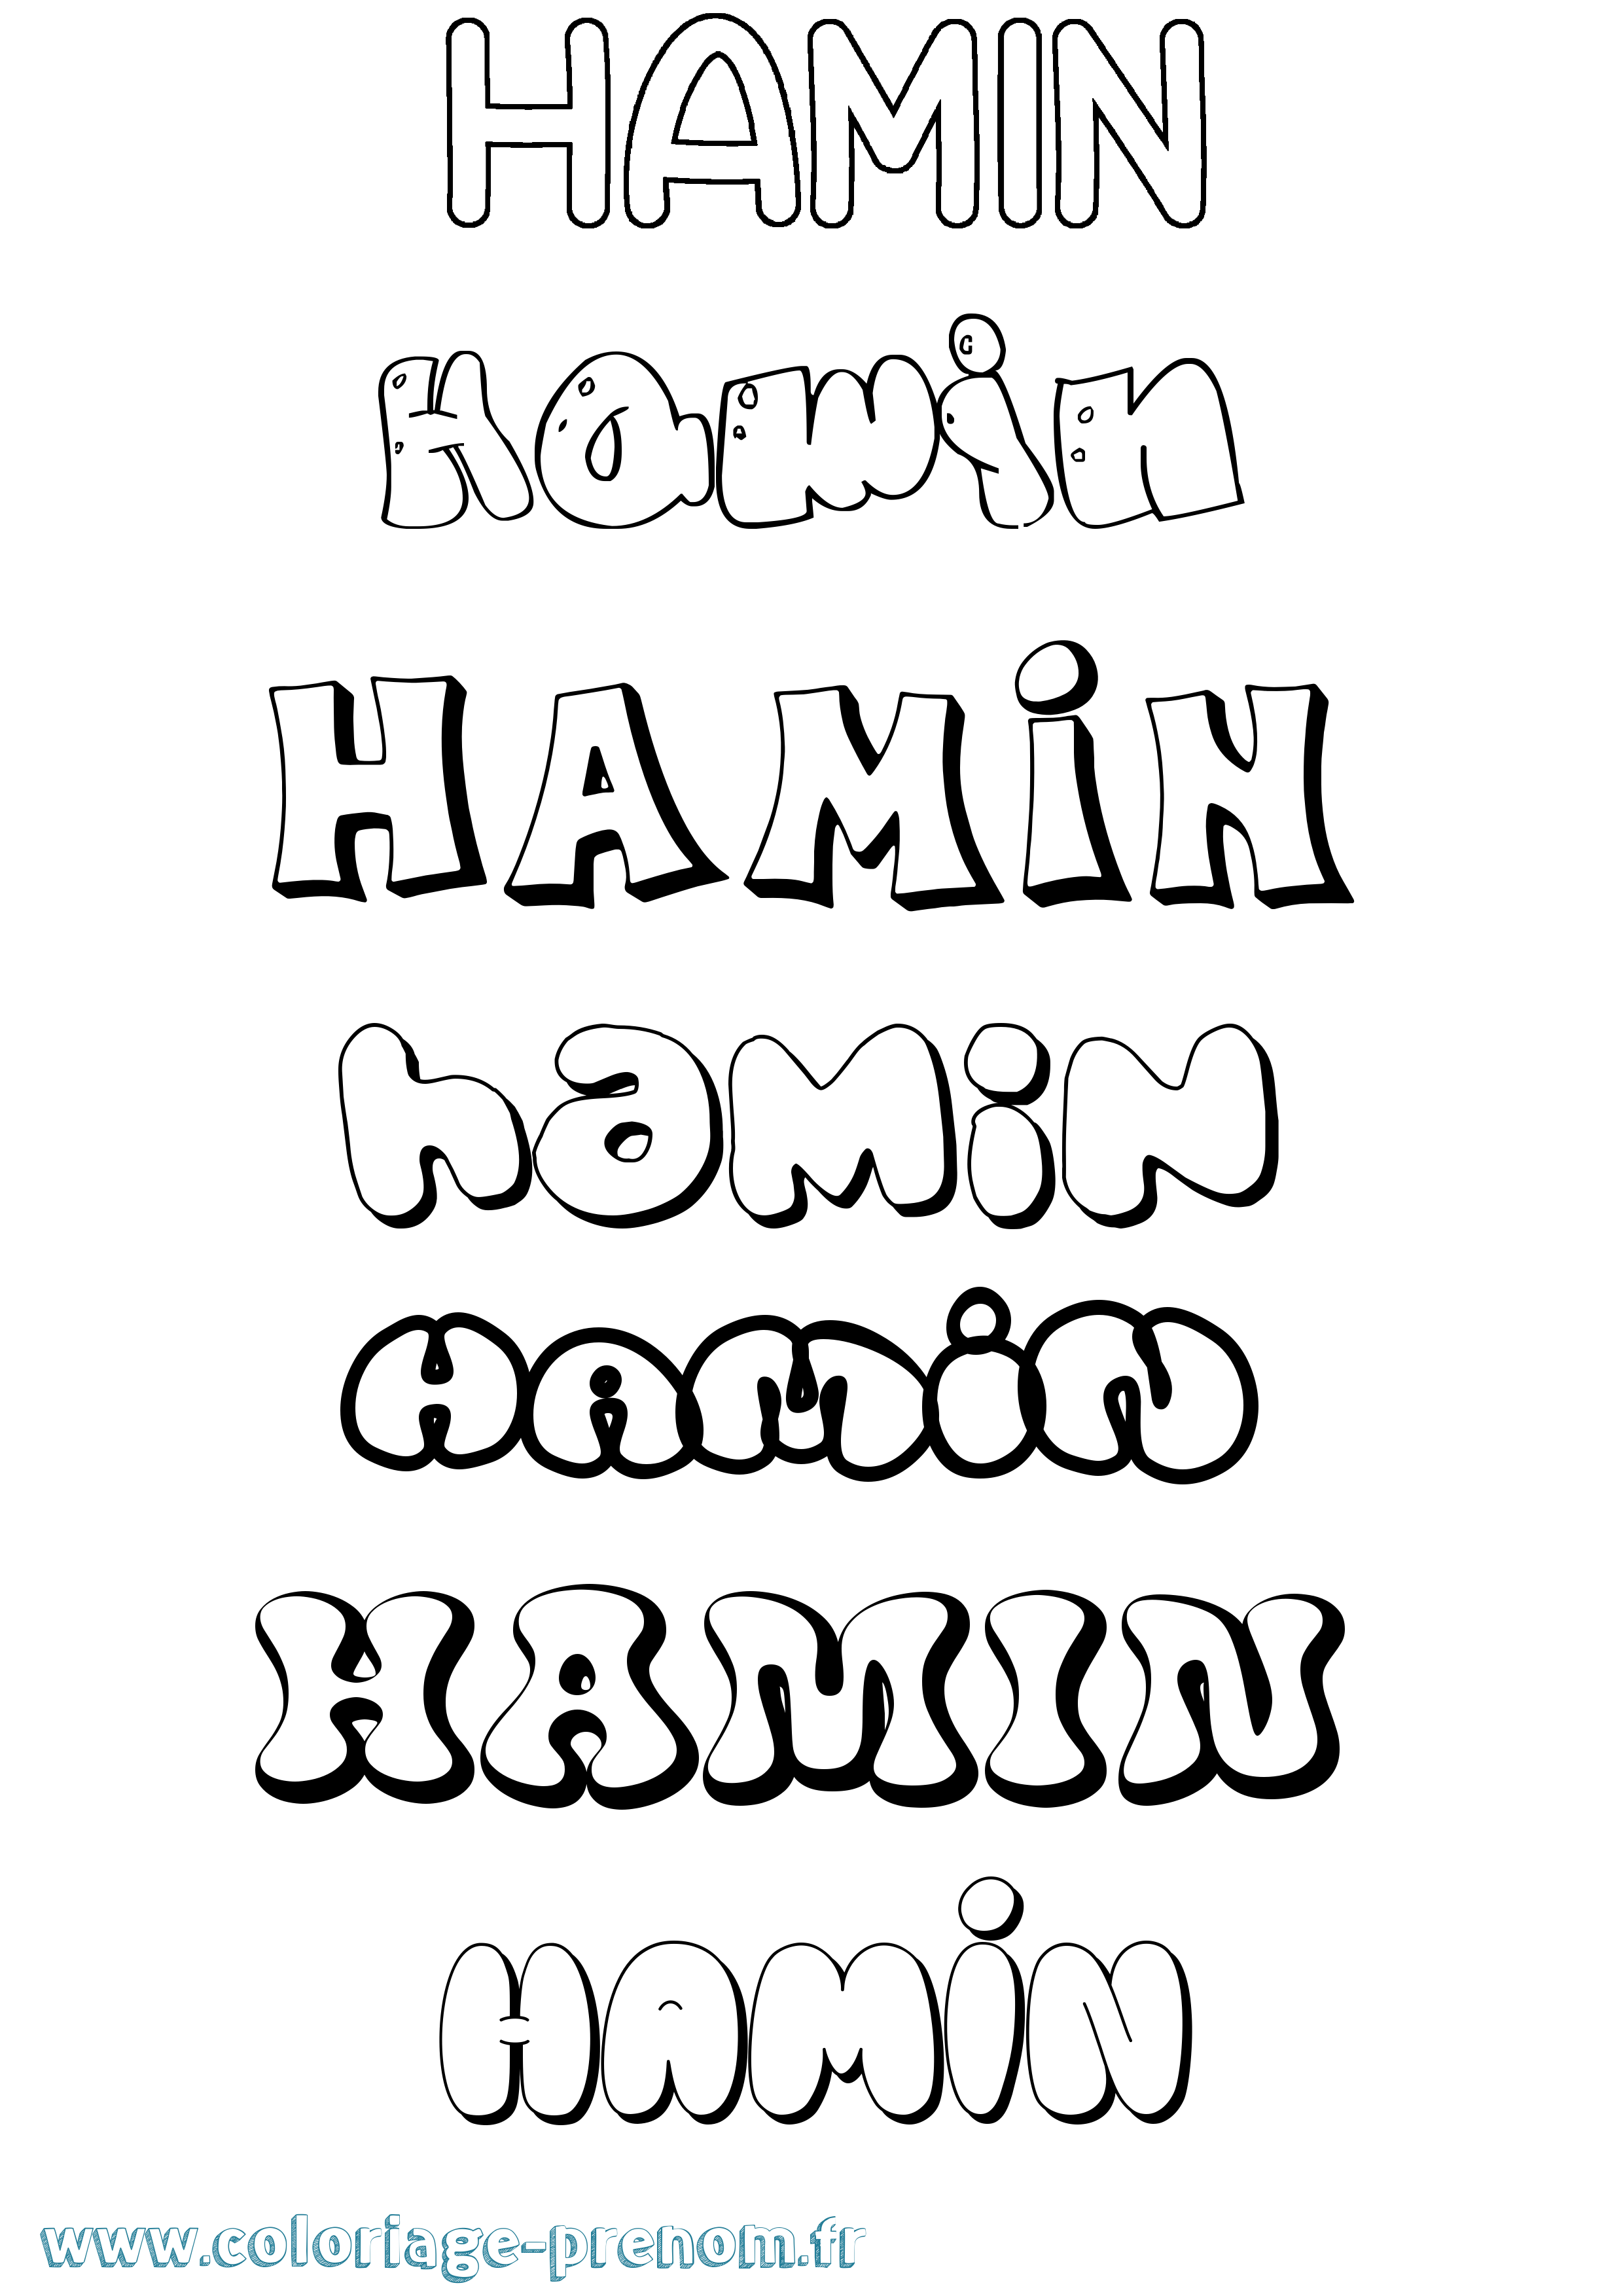 Coloriage prénom Hamin Bubble